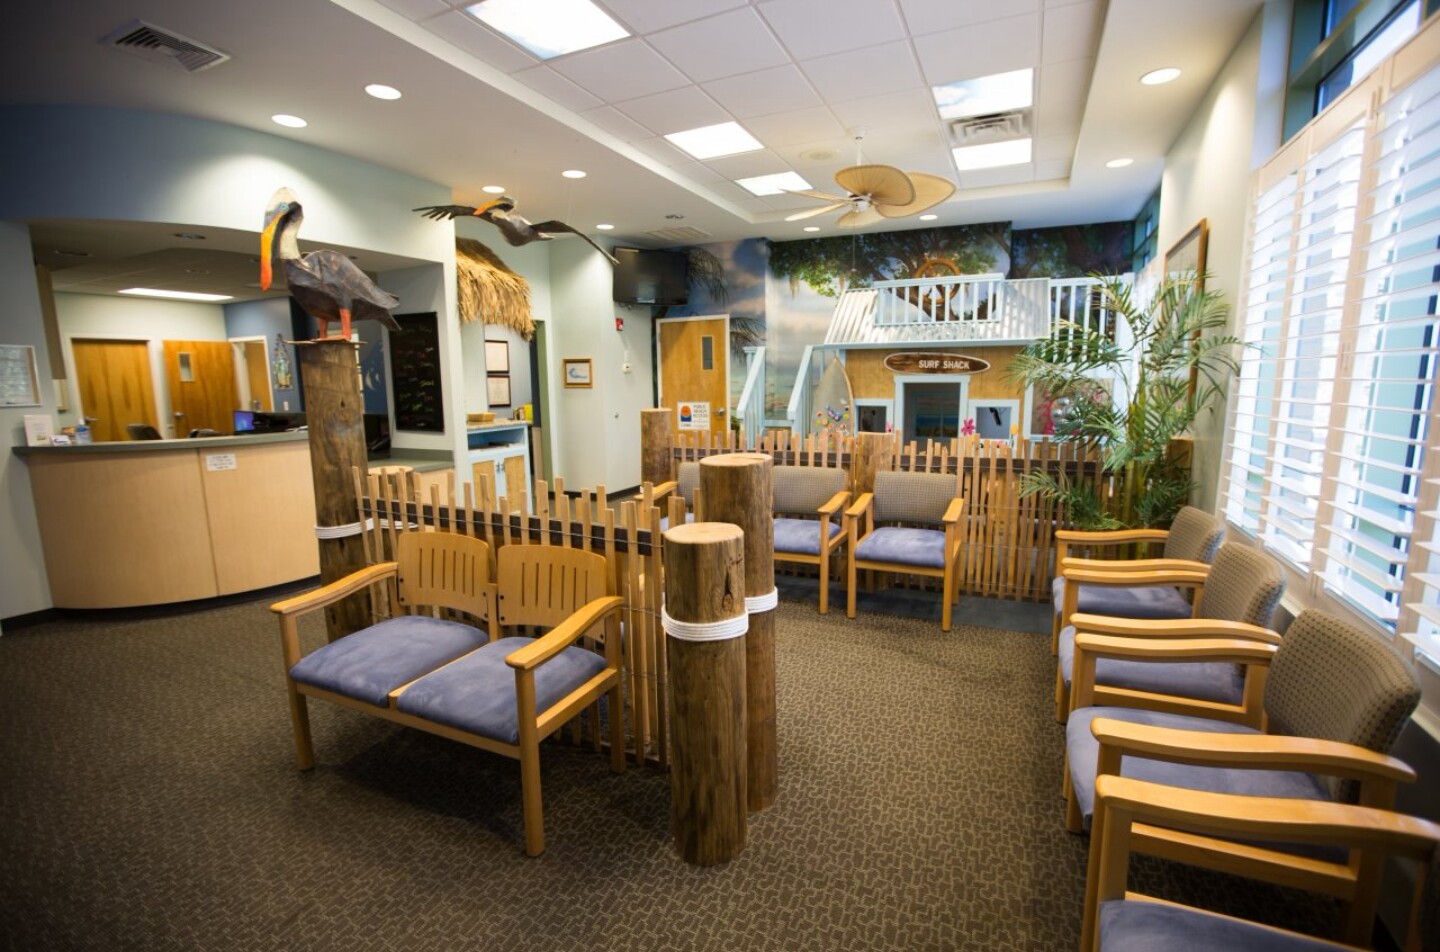 2-wilmington-pediatic-dentistry-main-floor